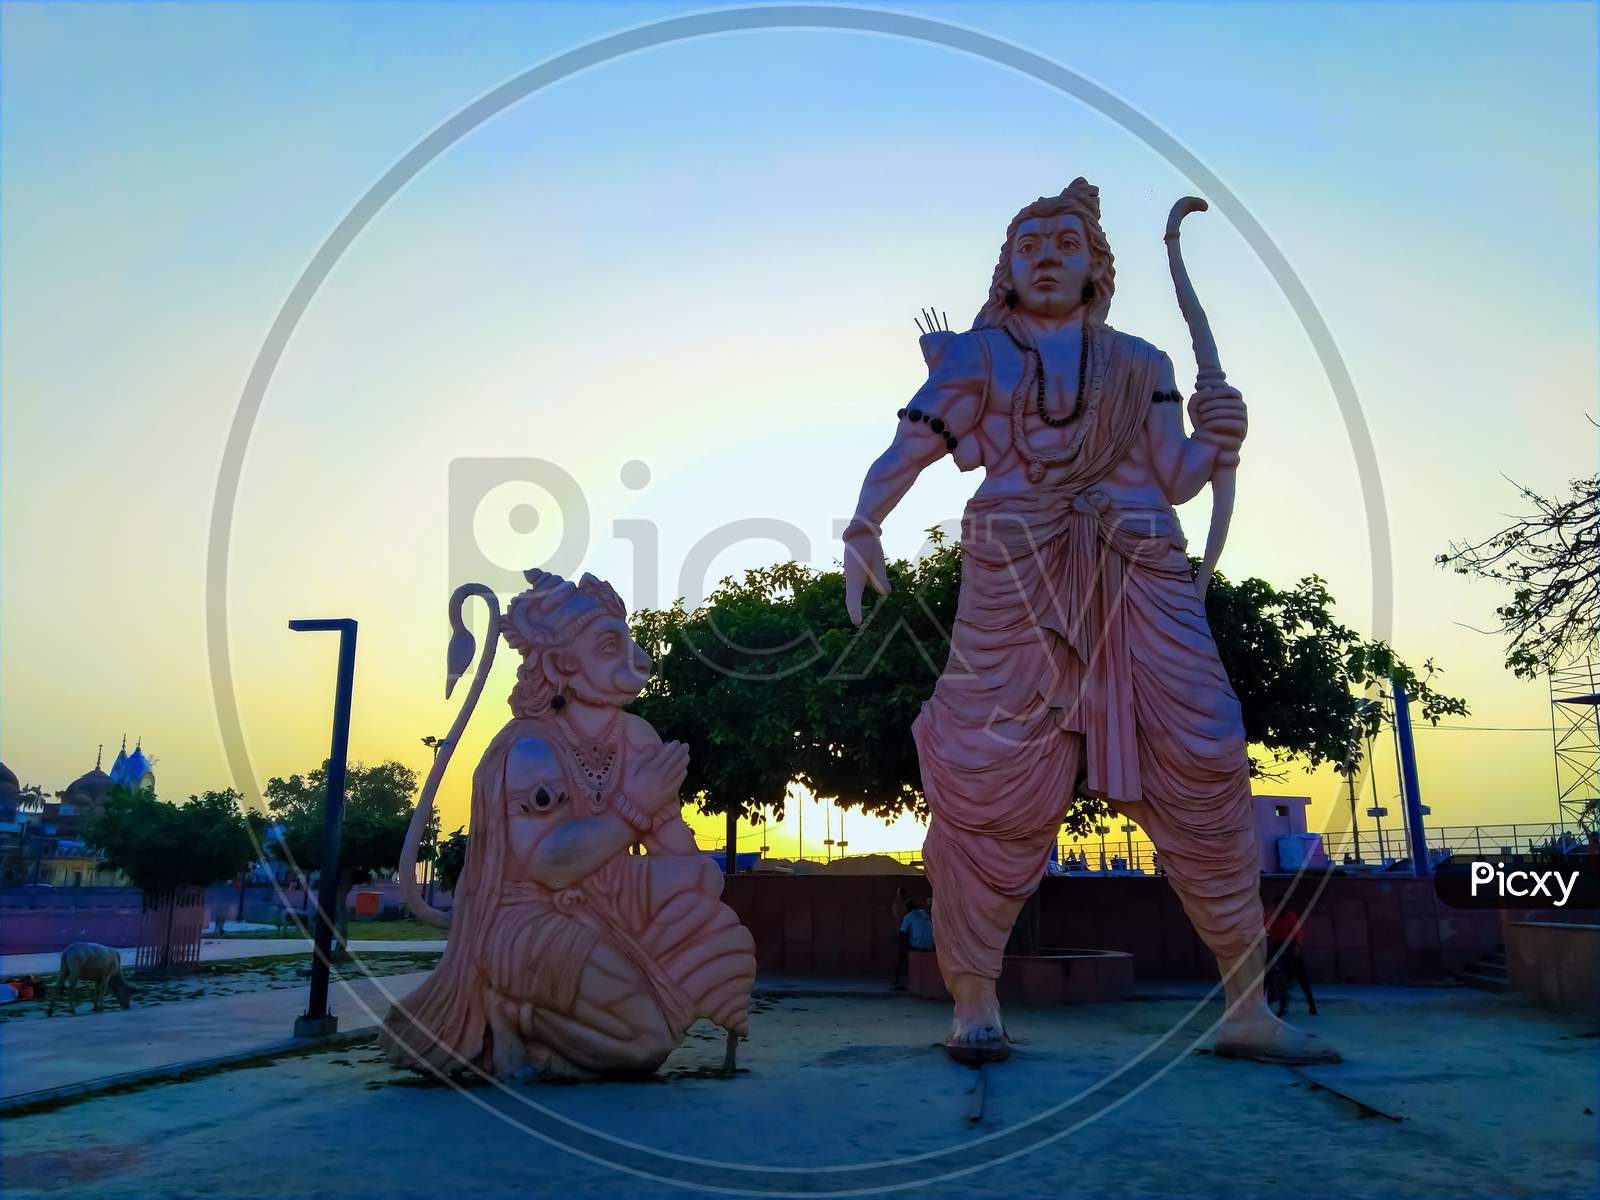 Idols of Lord Ram and Hanuman.